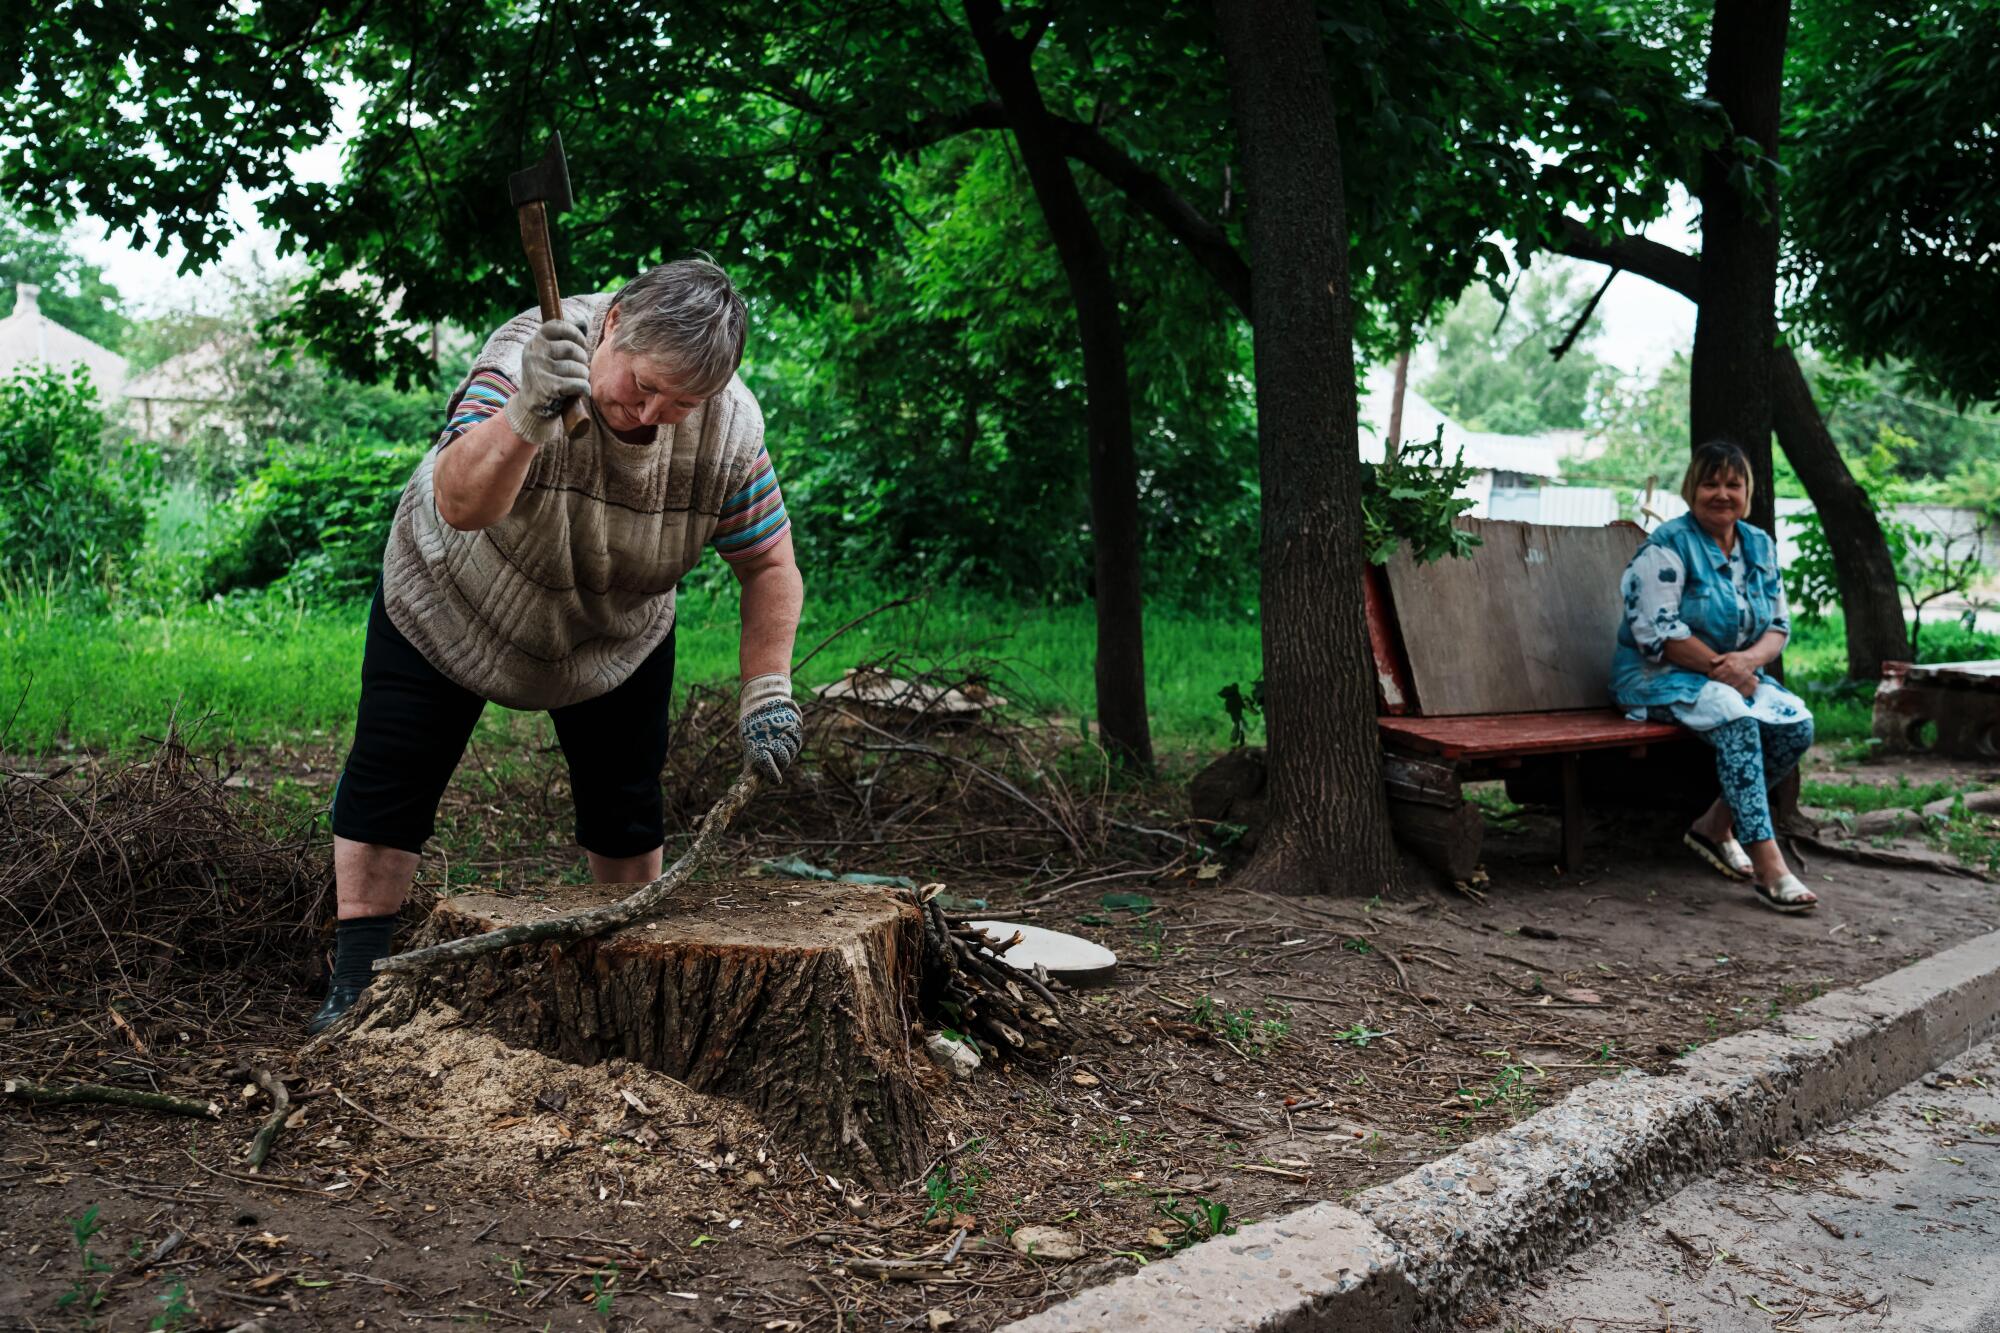 Liubov Vedeneeva, chops firewood in Lysychansk, Ukraine. "Time flies fast when you are having fun," she shrugs.